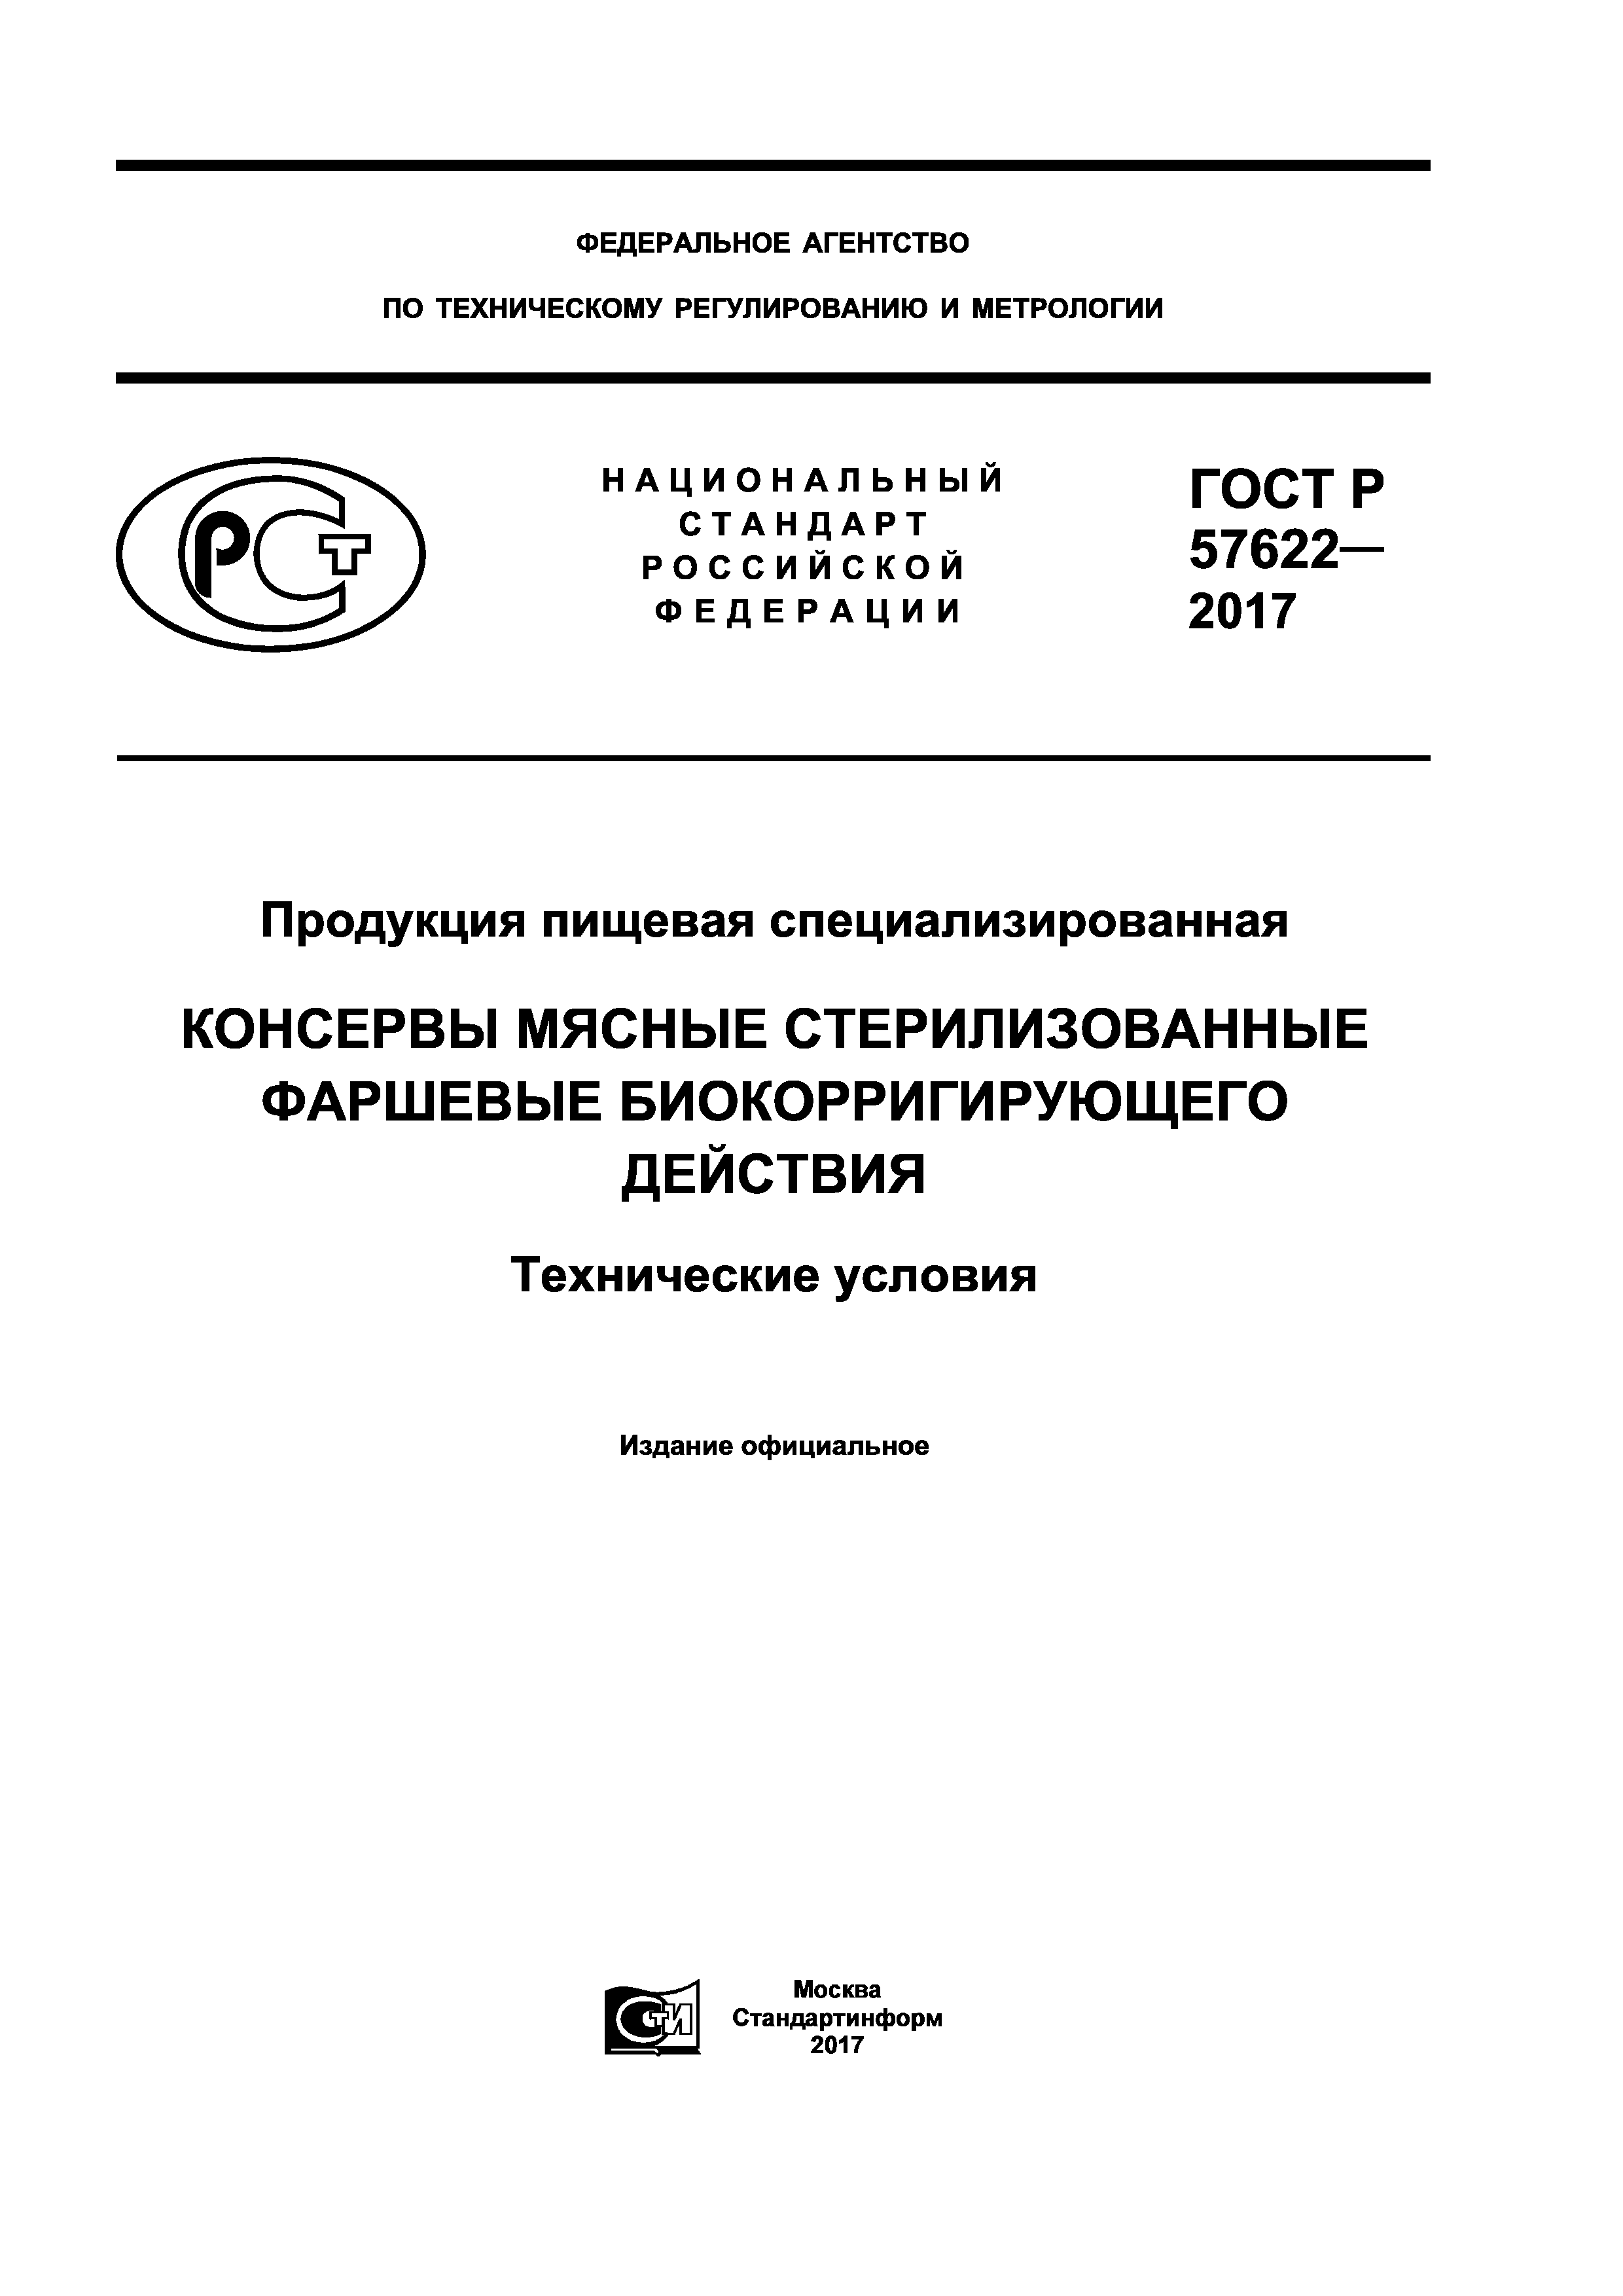 ГОСТ Р 57622-2017